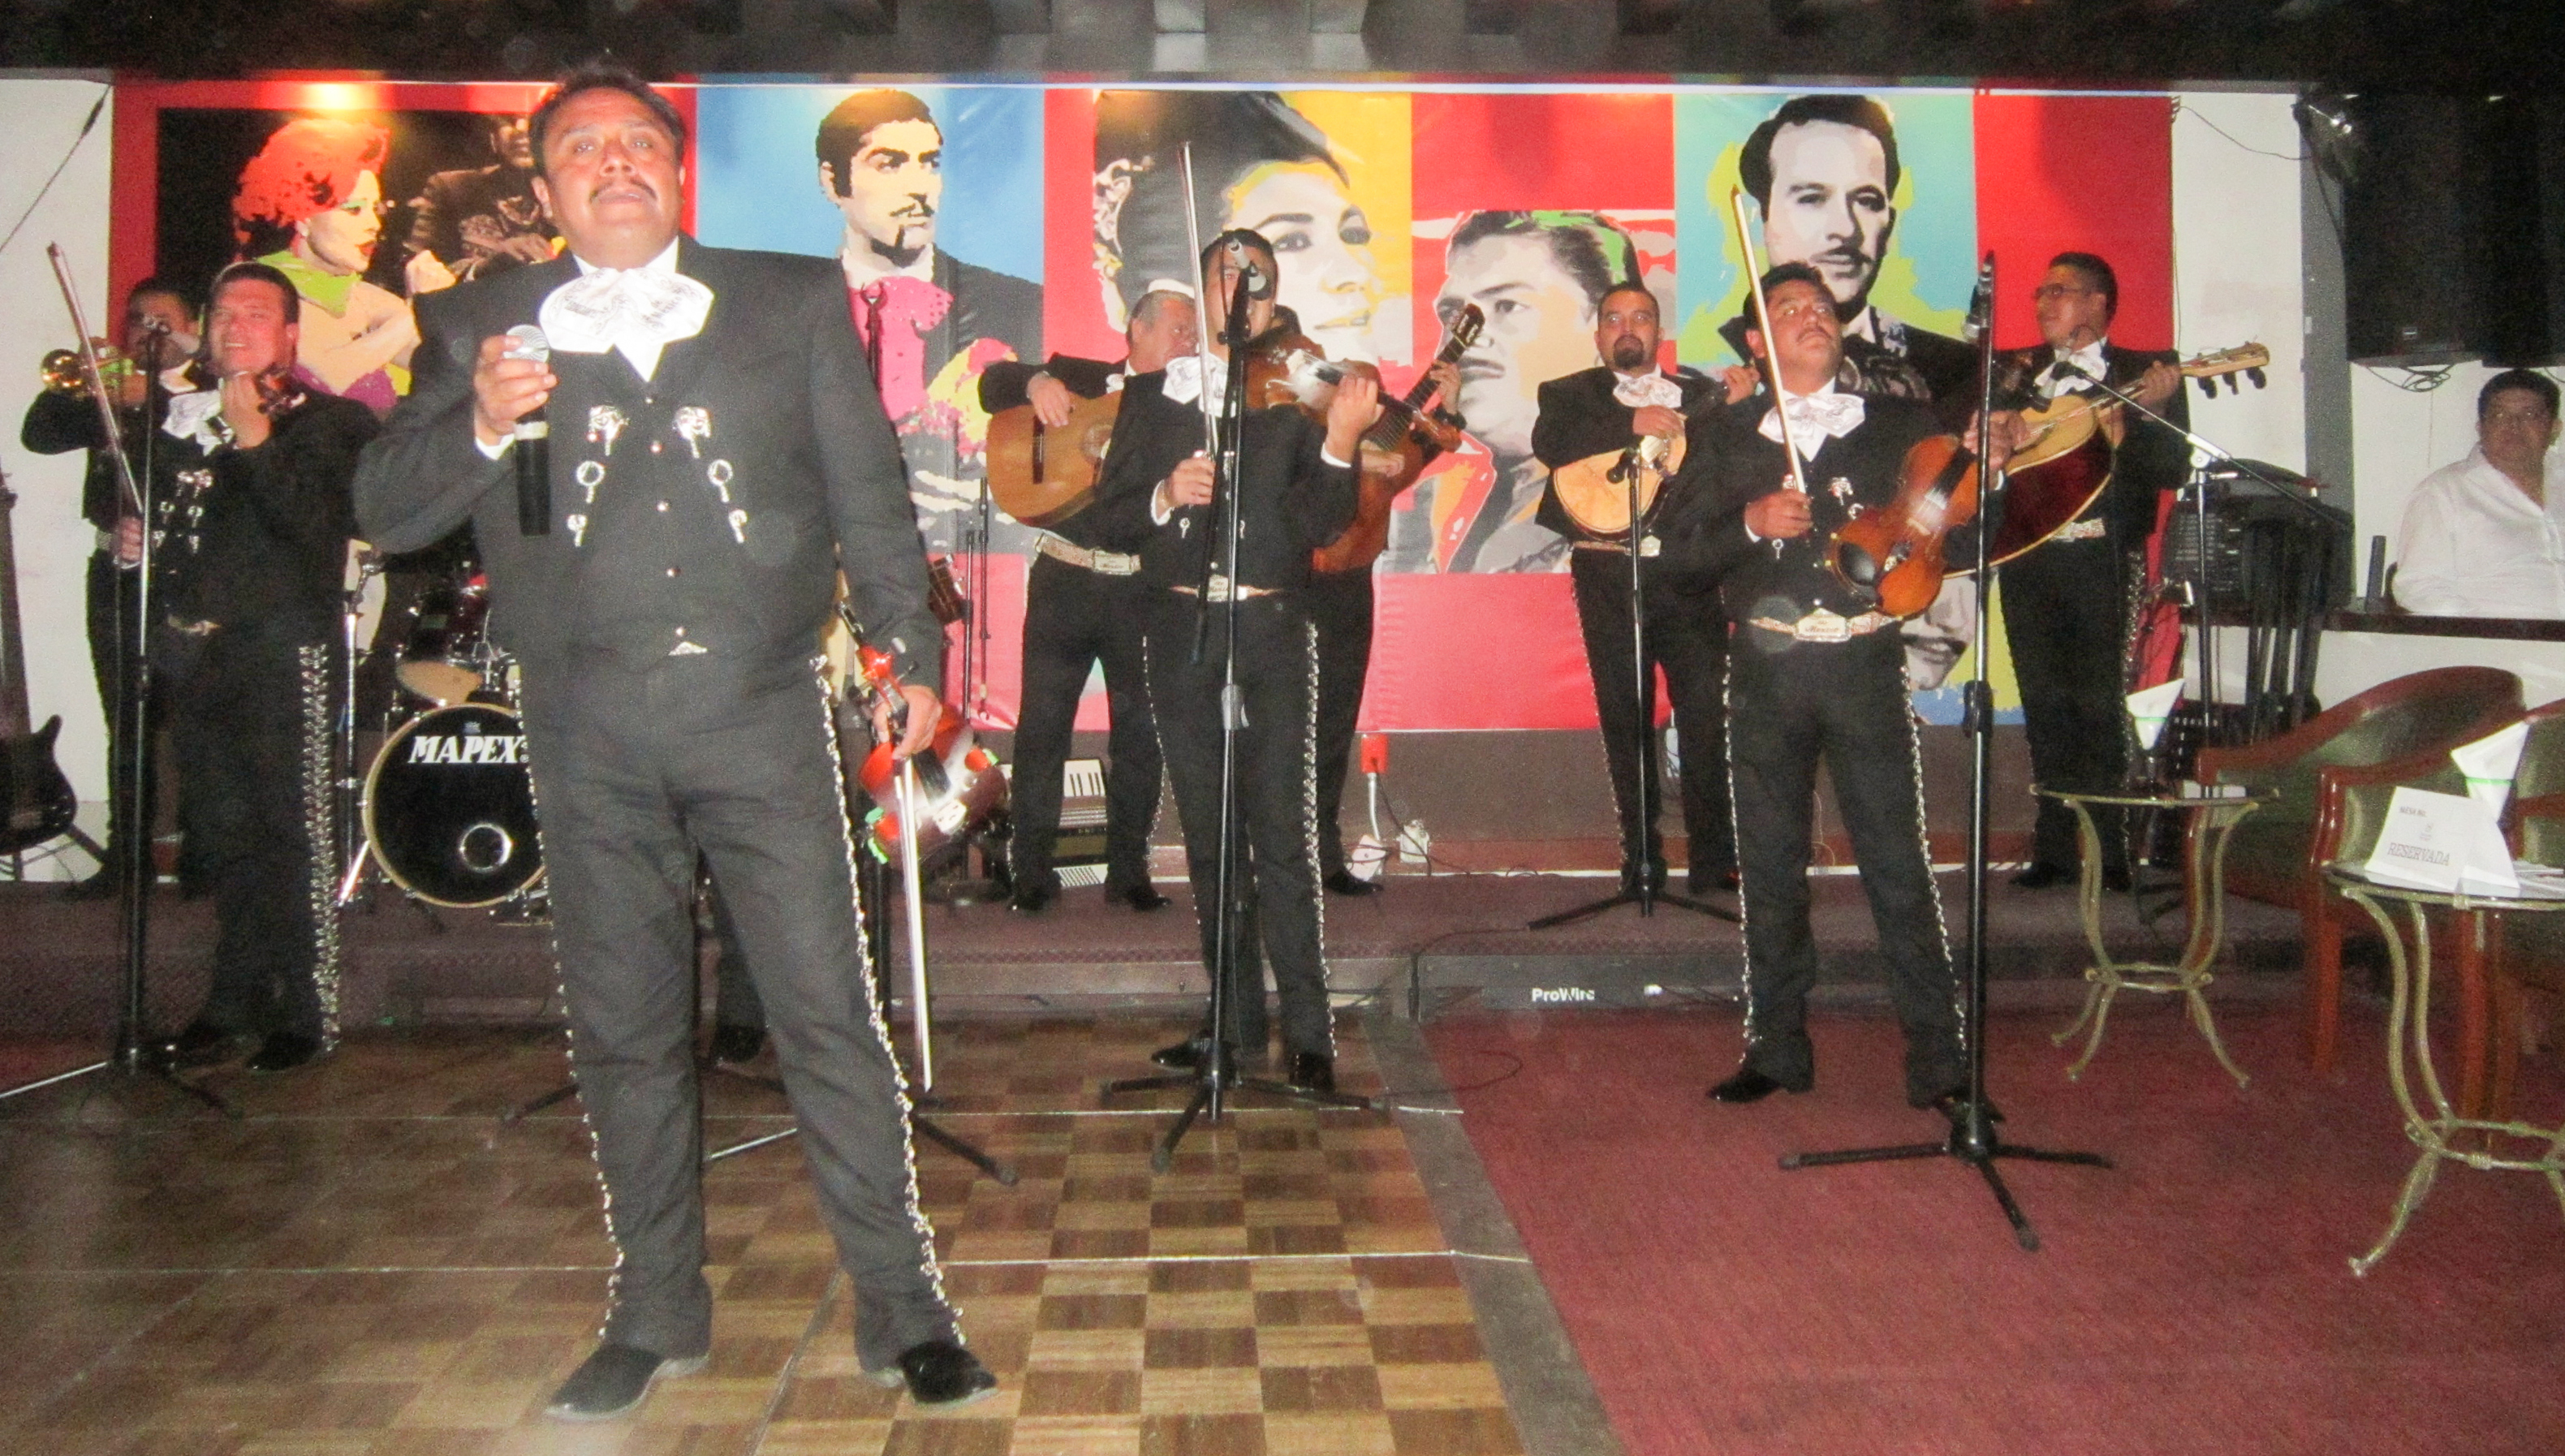 An image of Mariachi band